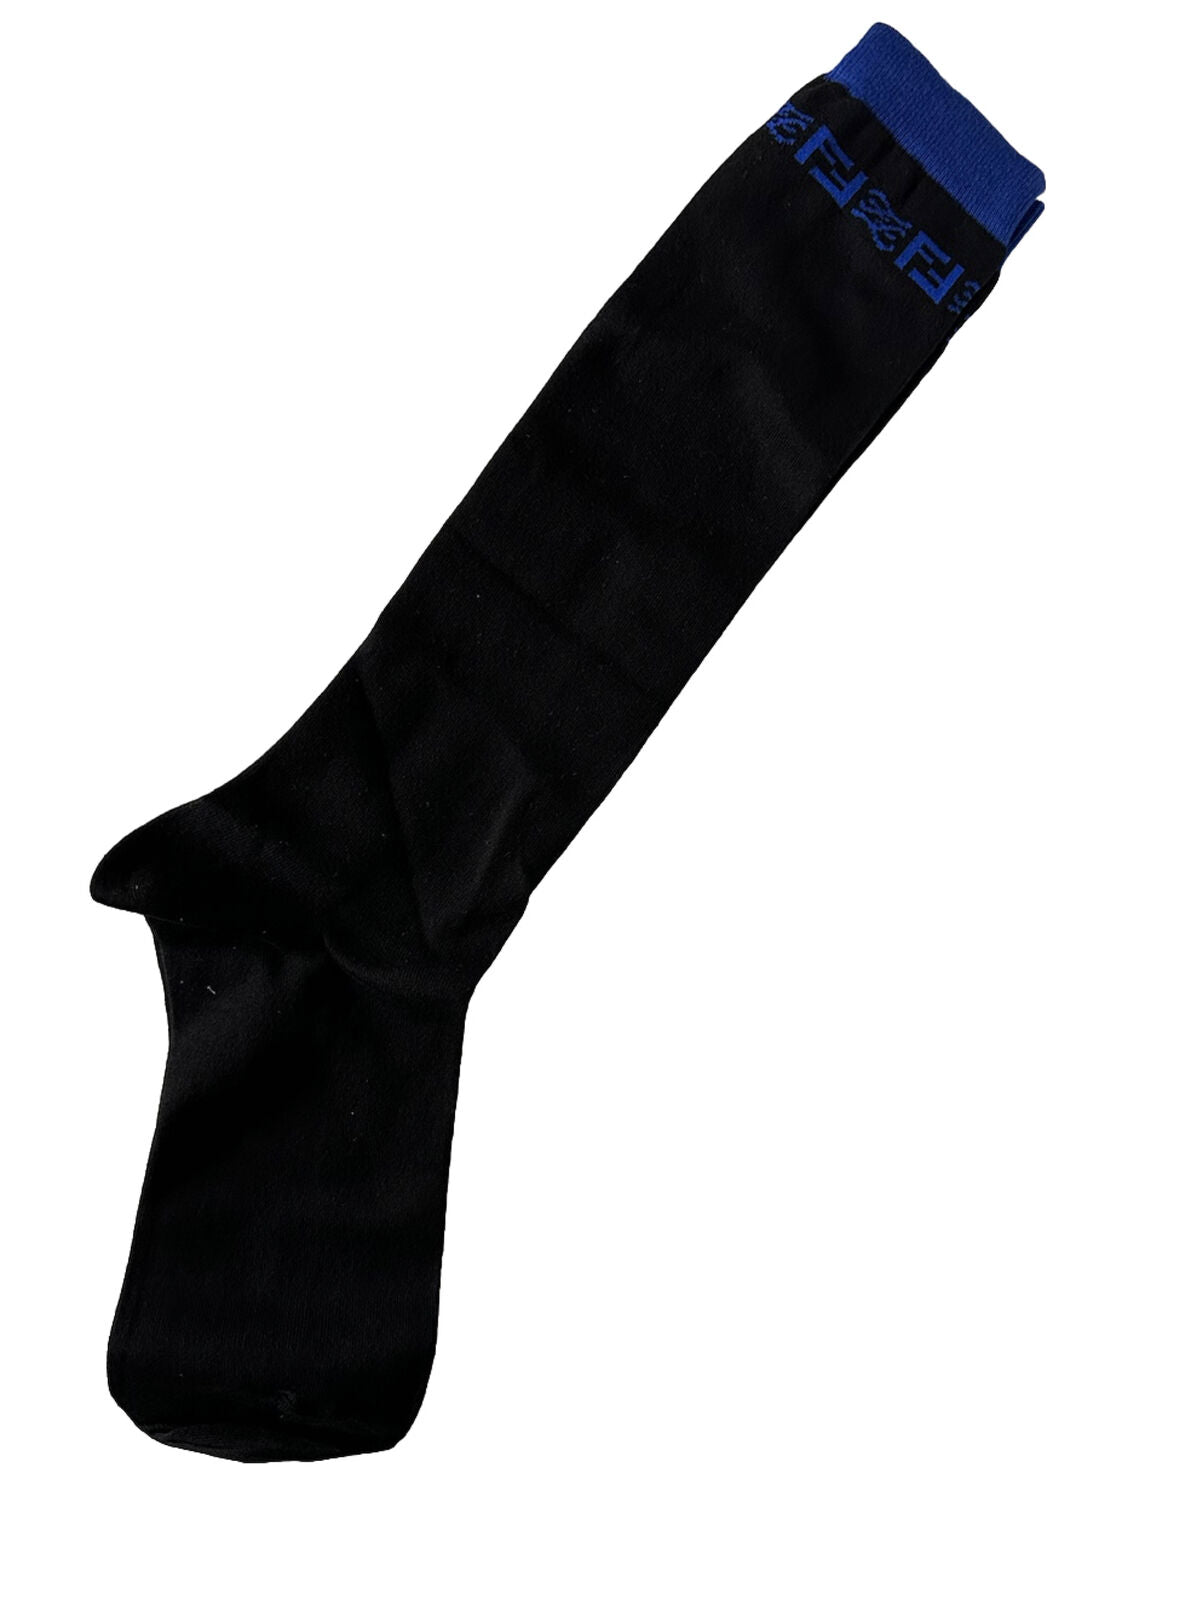 NWT $260 Fendi FF Karligraphy Socks Black Large Made in Italy